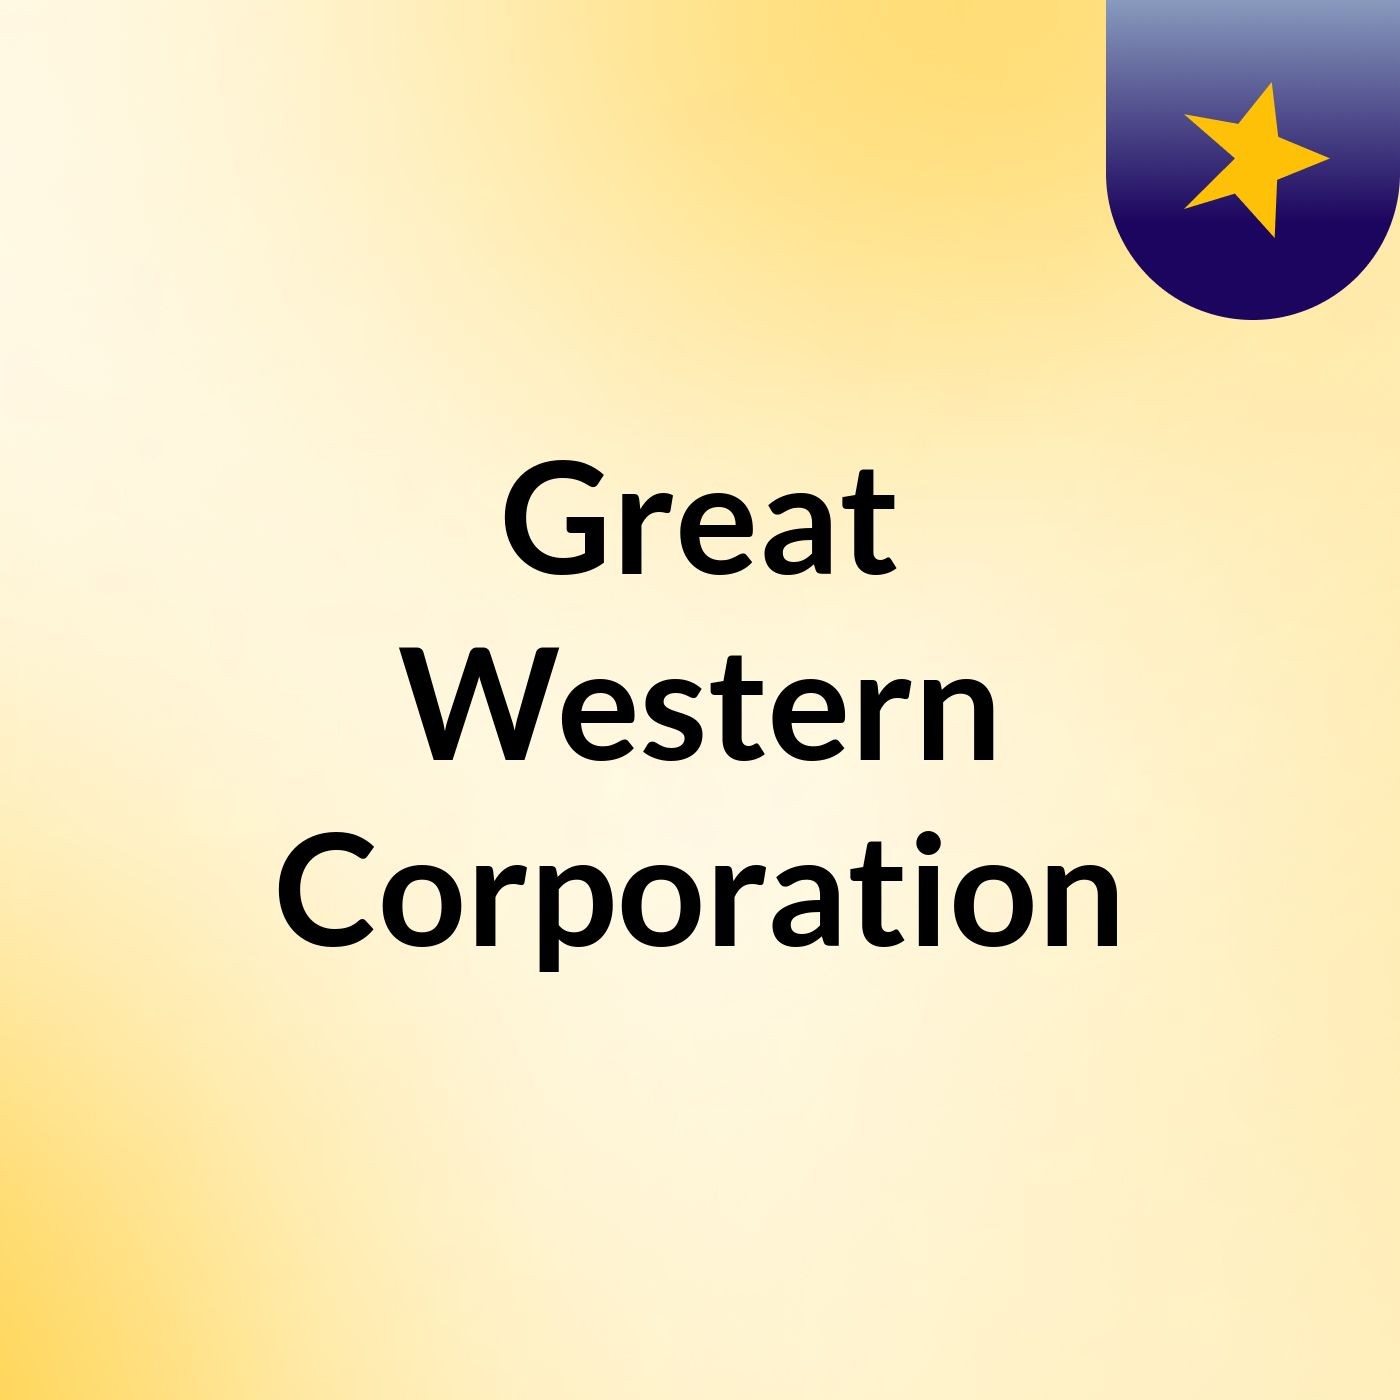 Great Western Corporation